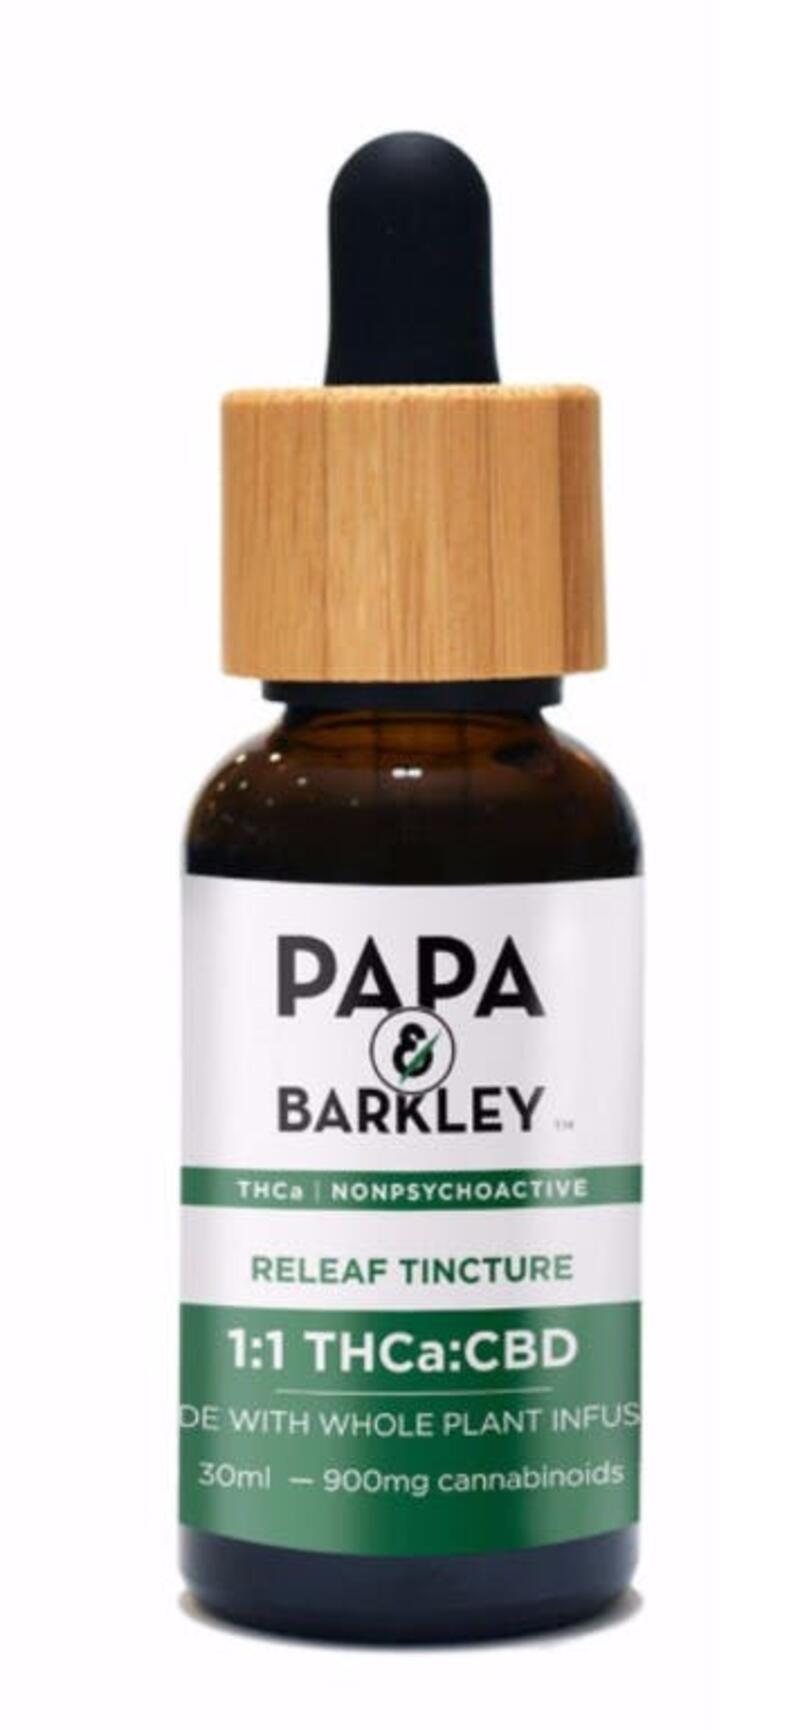 Papa & Barkley - Releaf Tincture 1:1 THCA:CBD (900mg Cannabinoids)